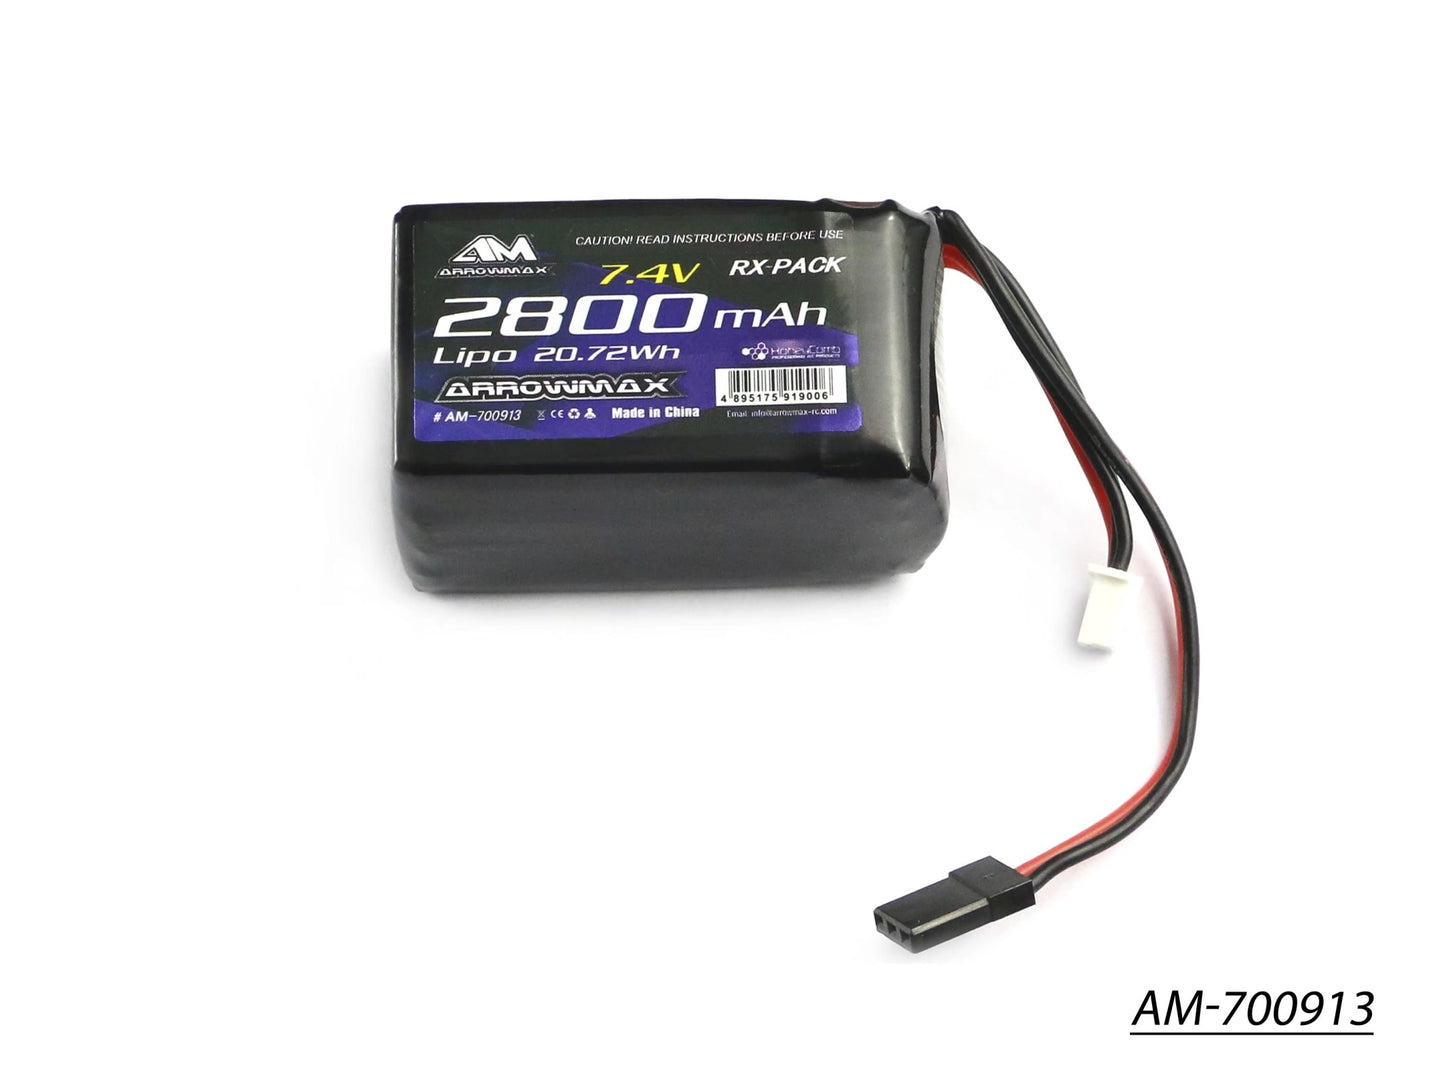 AM Lipo 2800mAh 2S TX/RX 7.4V Hump Pack (AM-700913)